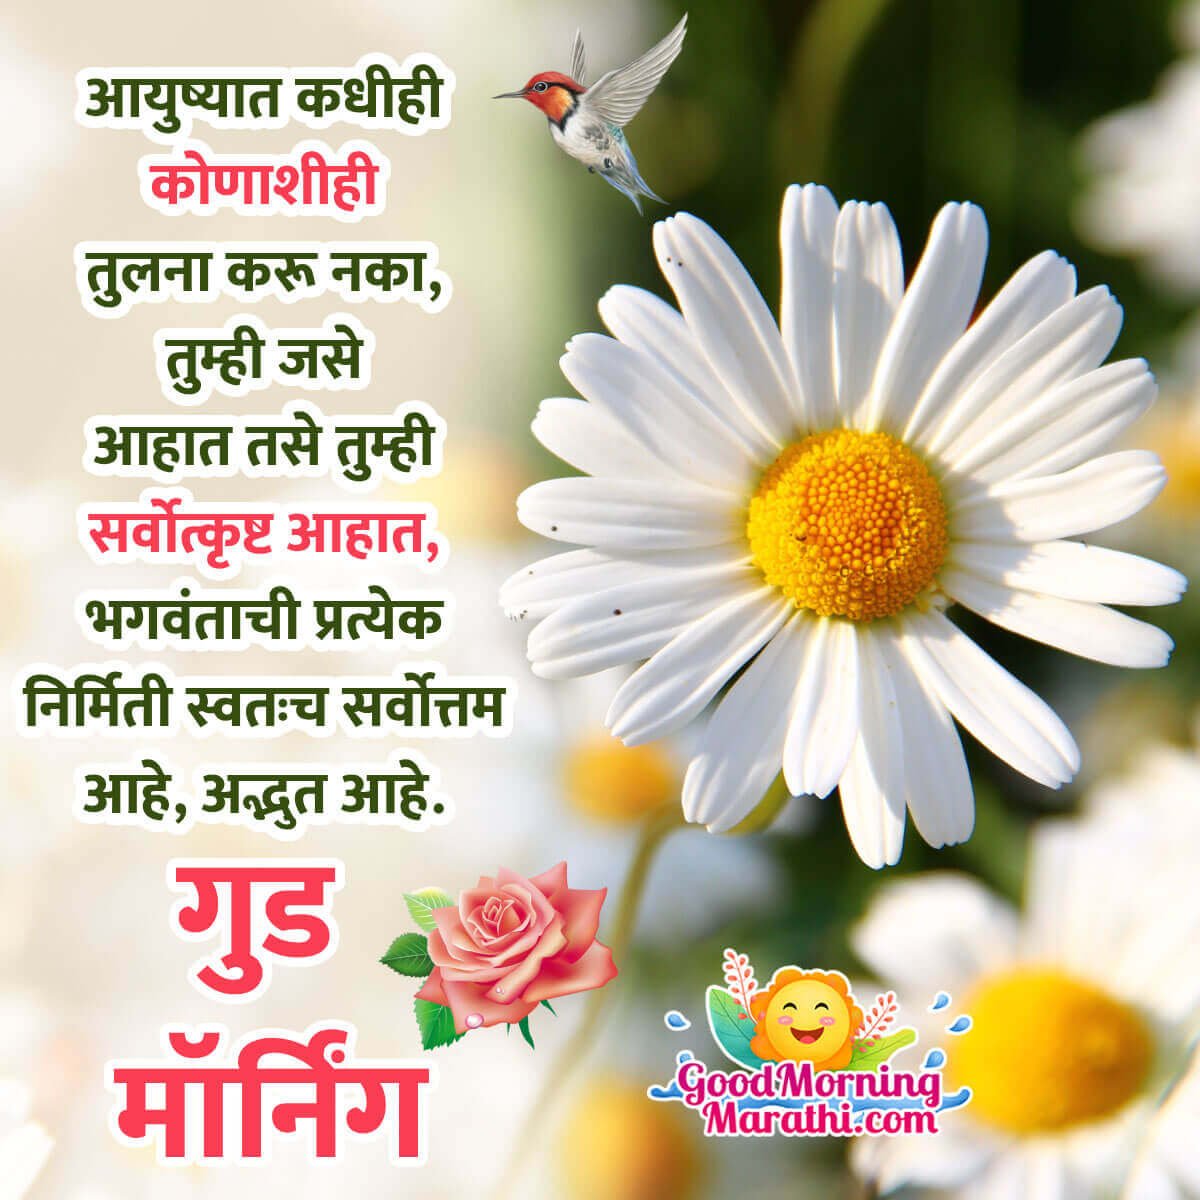 Good Morning Marathi Message Pic